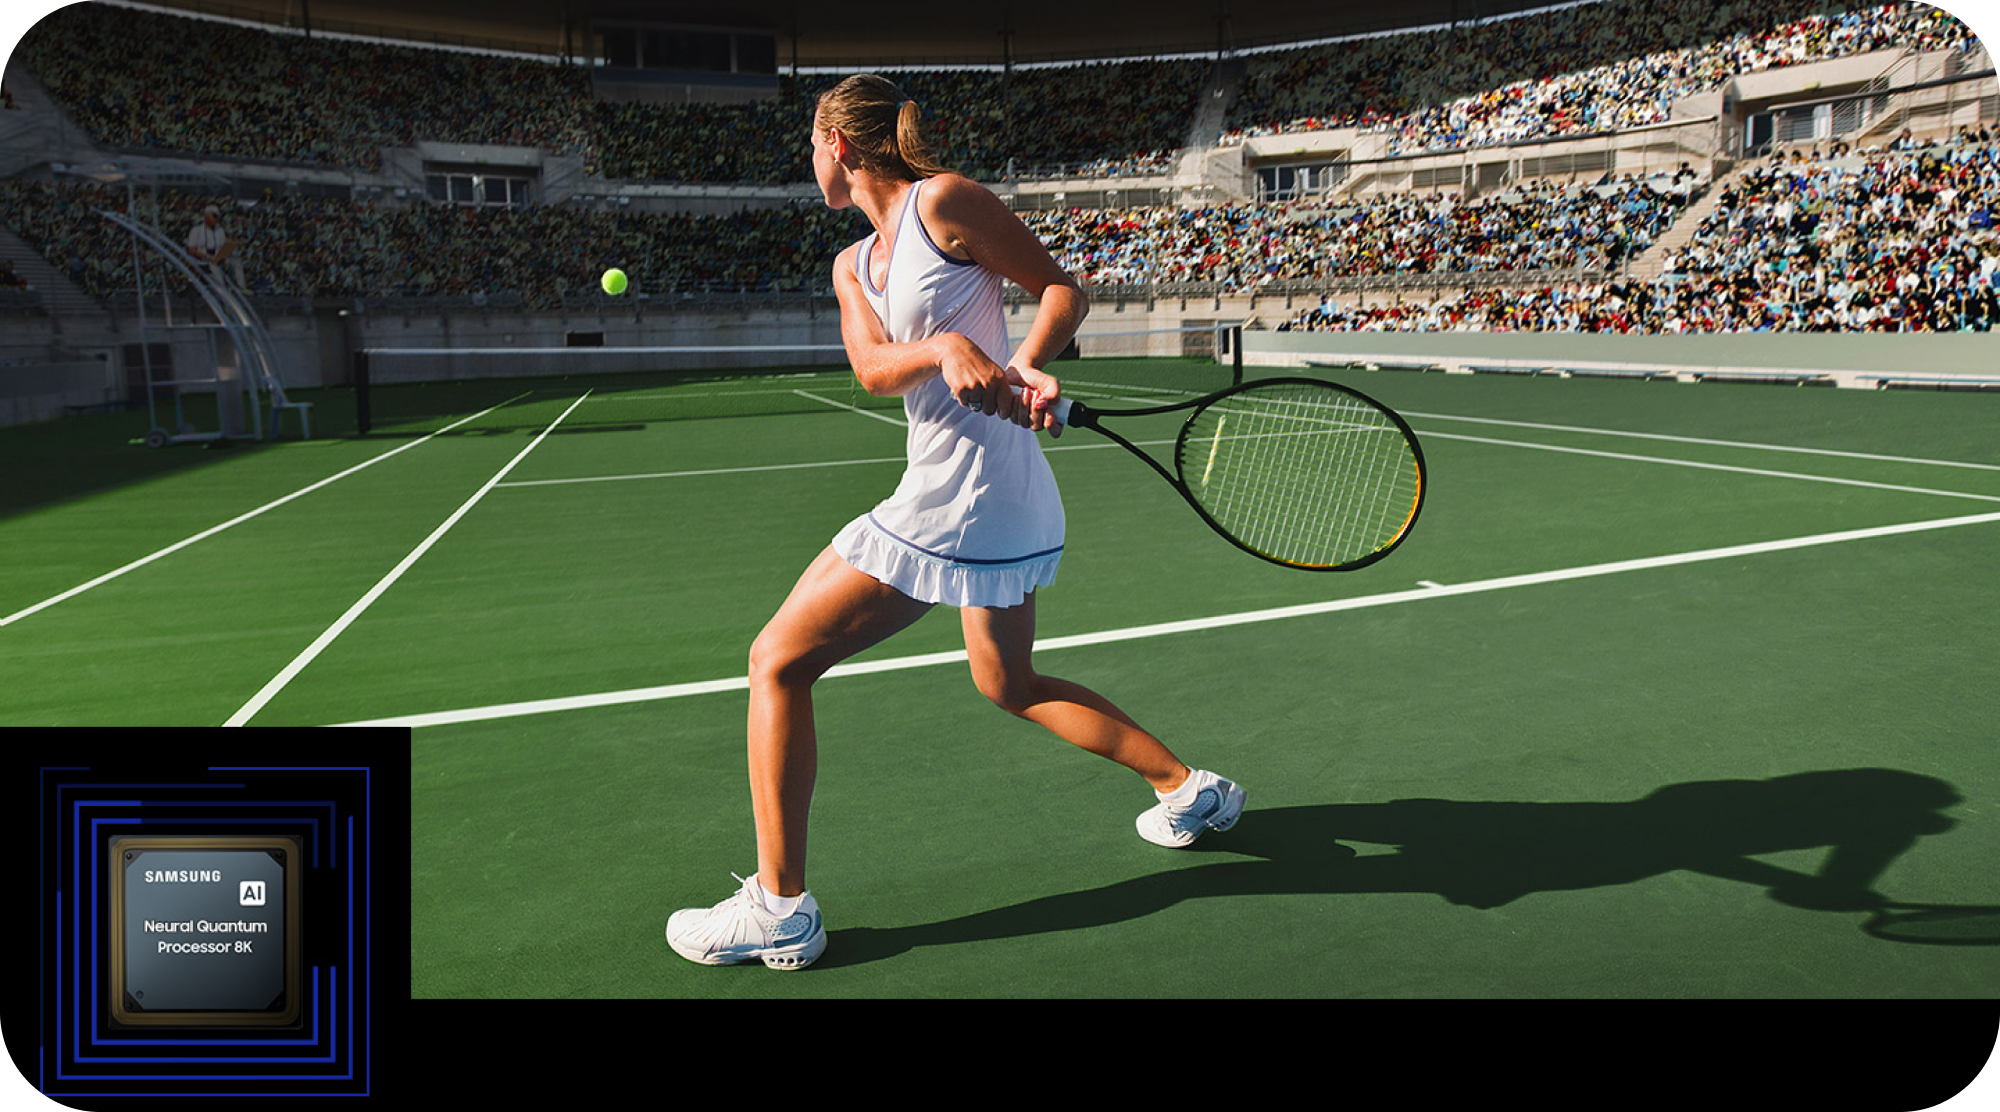 Samsung TV med Neural Quantum Processor 8K og en jente som spiller tennis